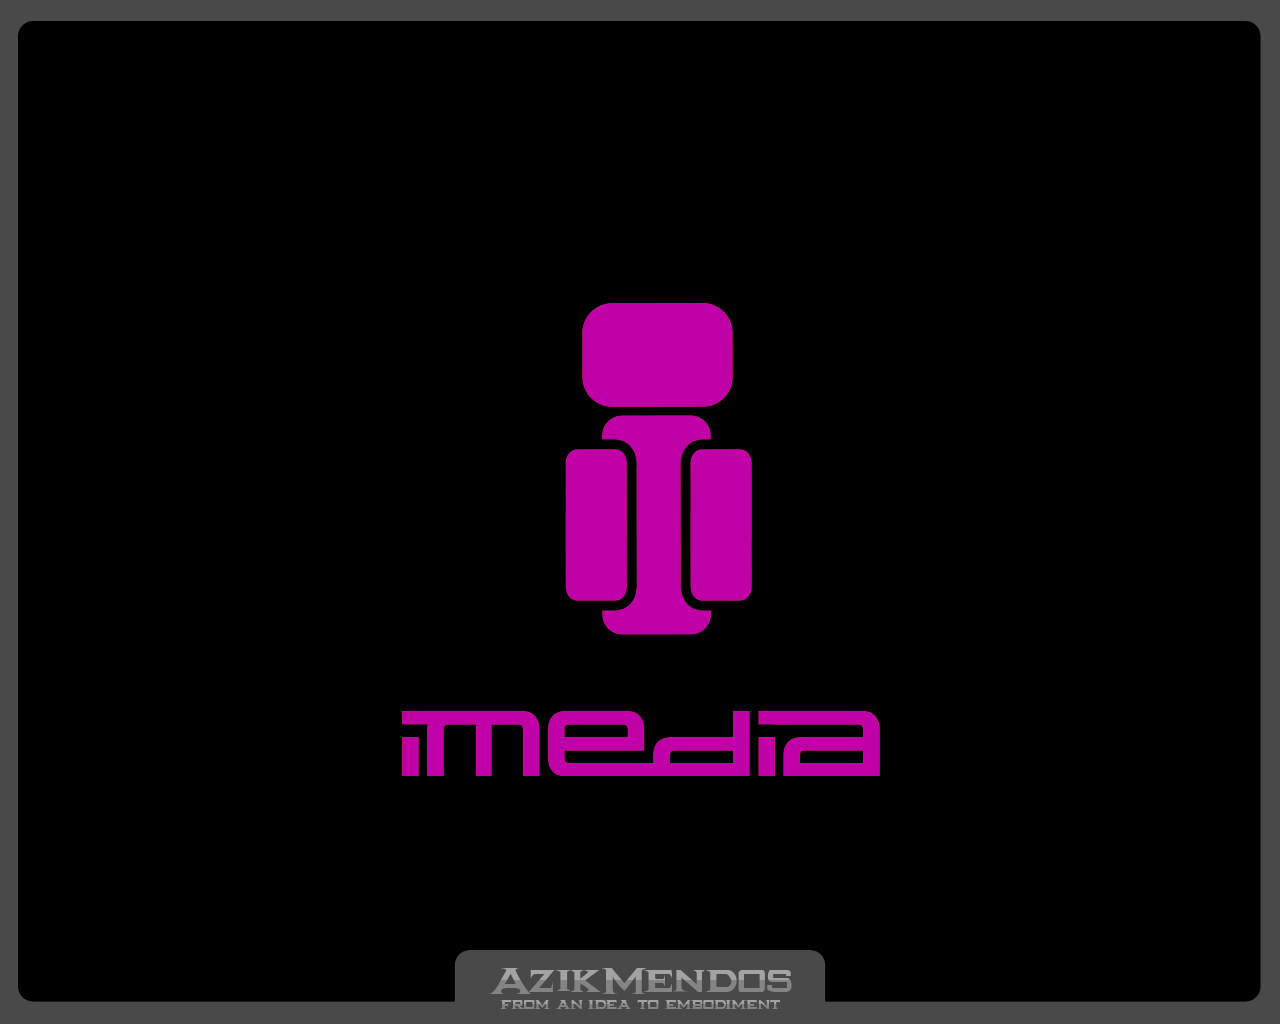 iMedia